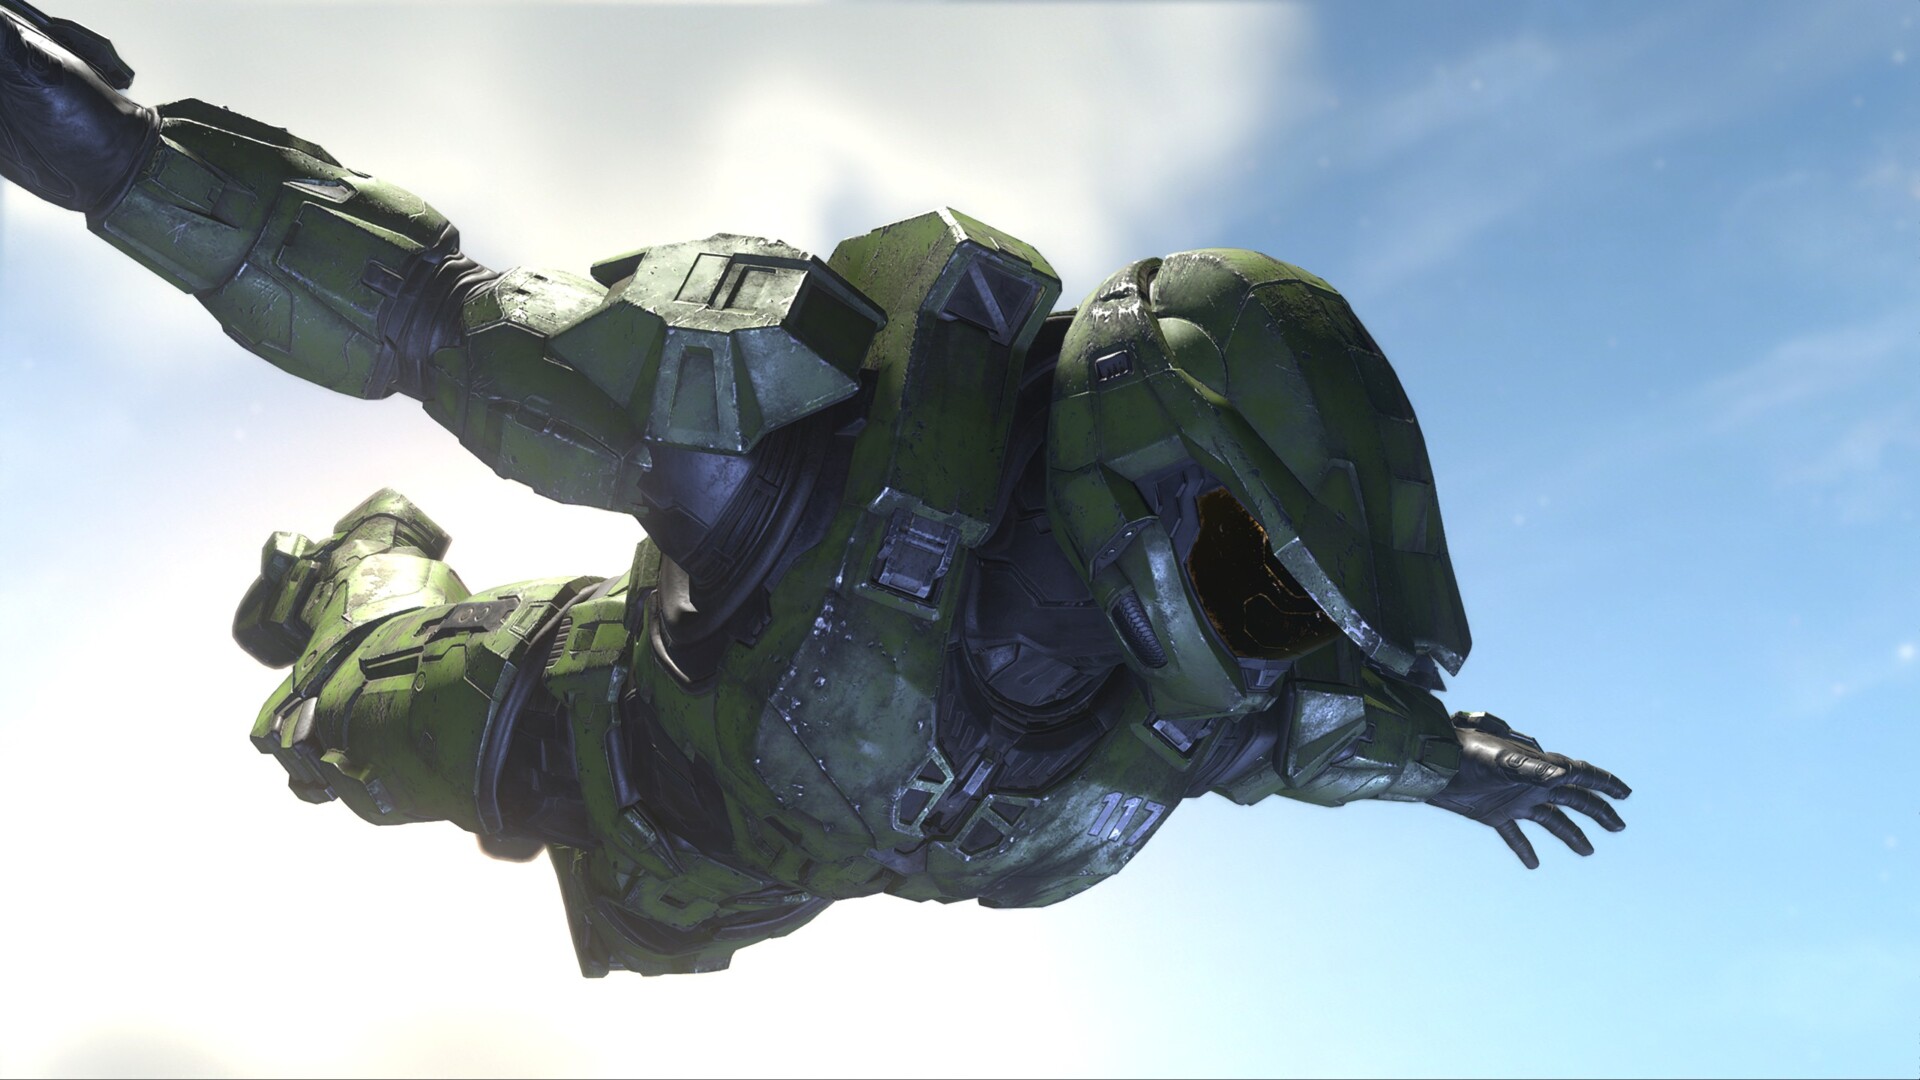 Halo Infinite Multiplayer review: Spartan combat has never felt better